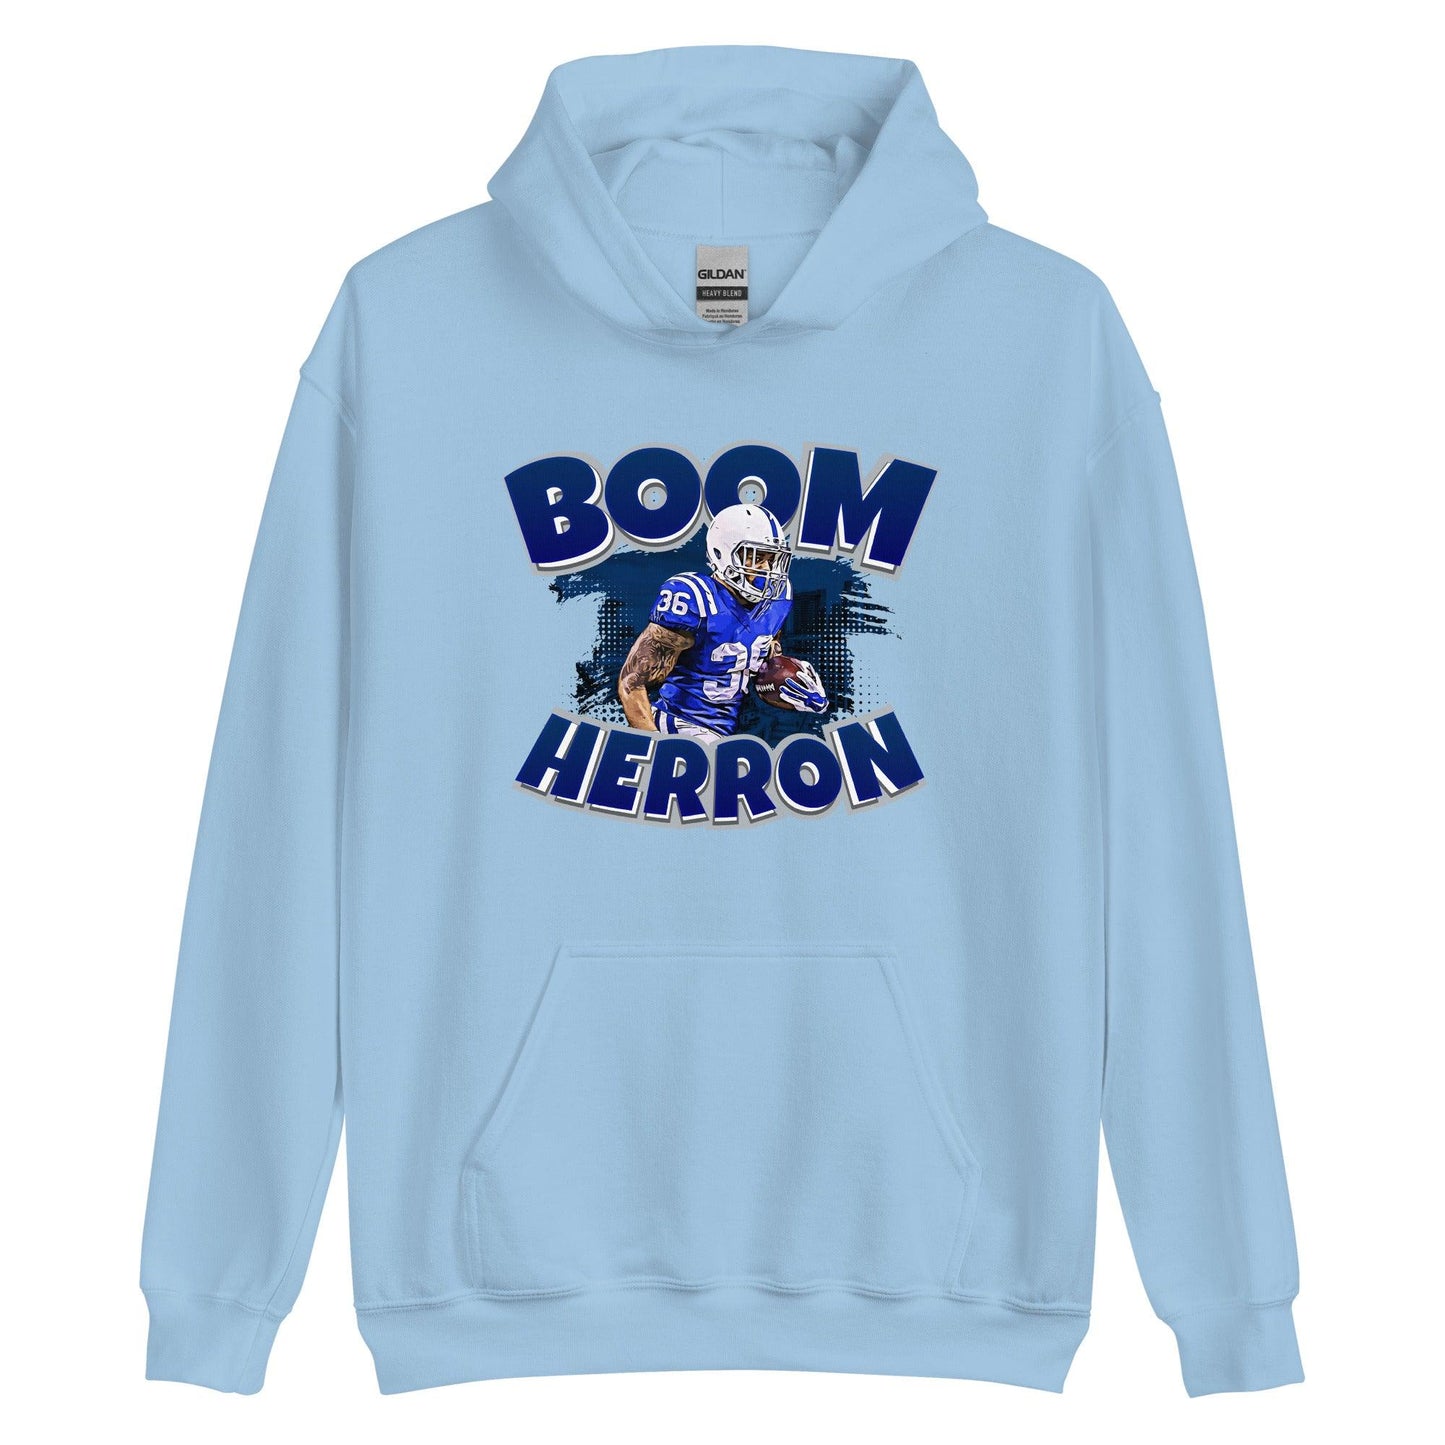 Boom Herron "Gameday" Hoodie - Fan Arch